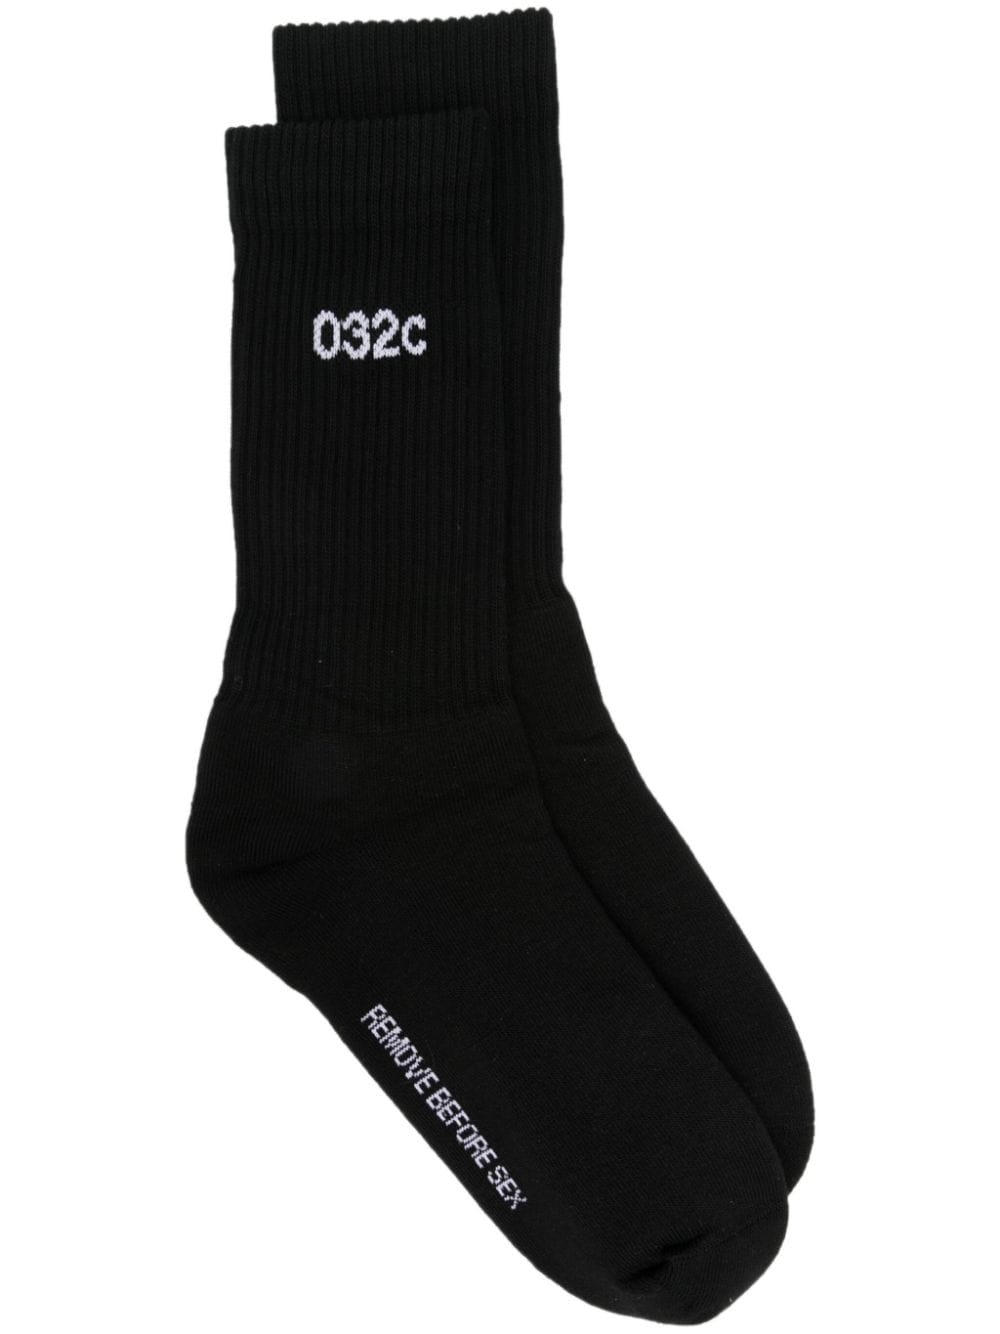 032C 032C- Cotton Socks